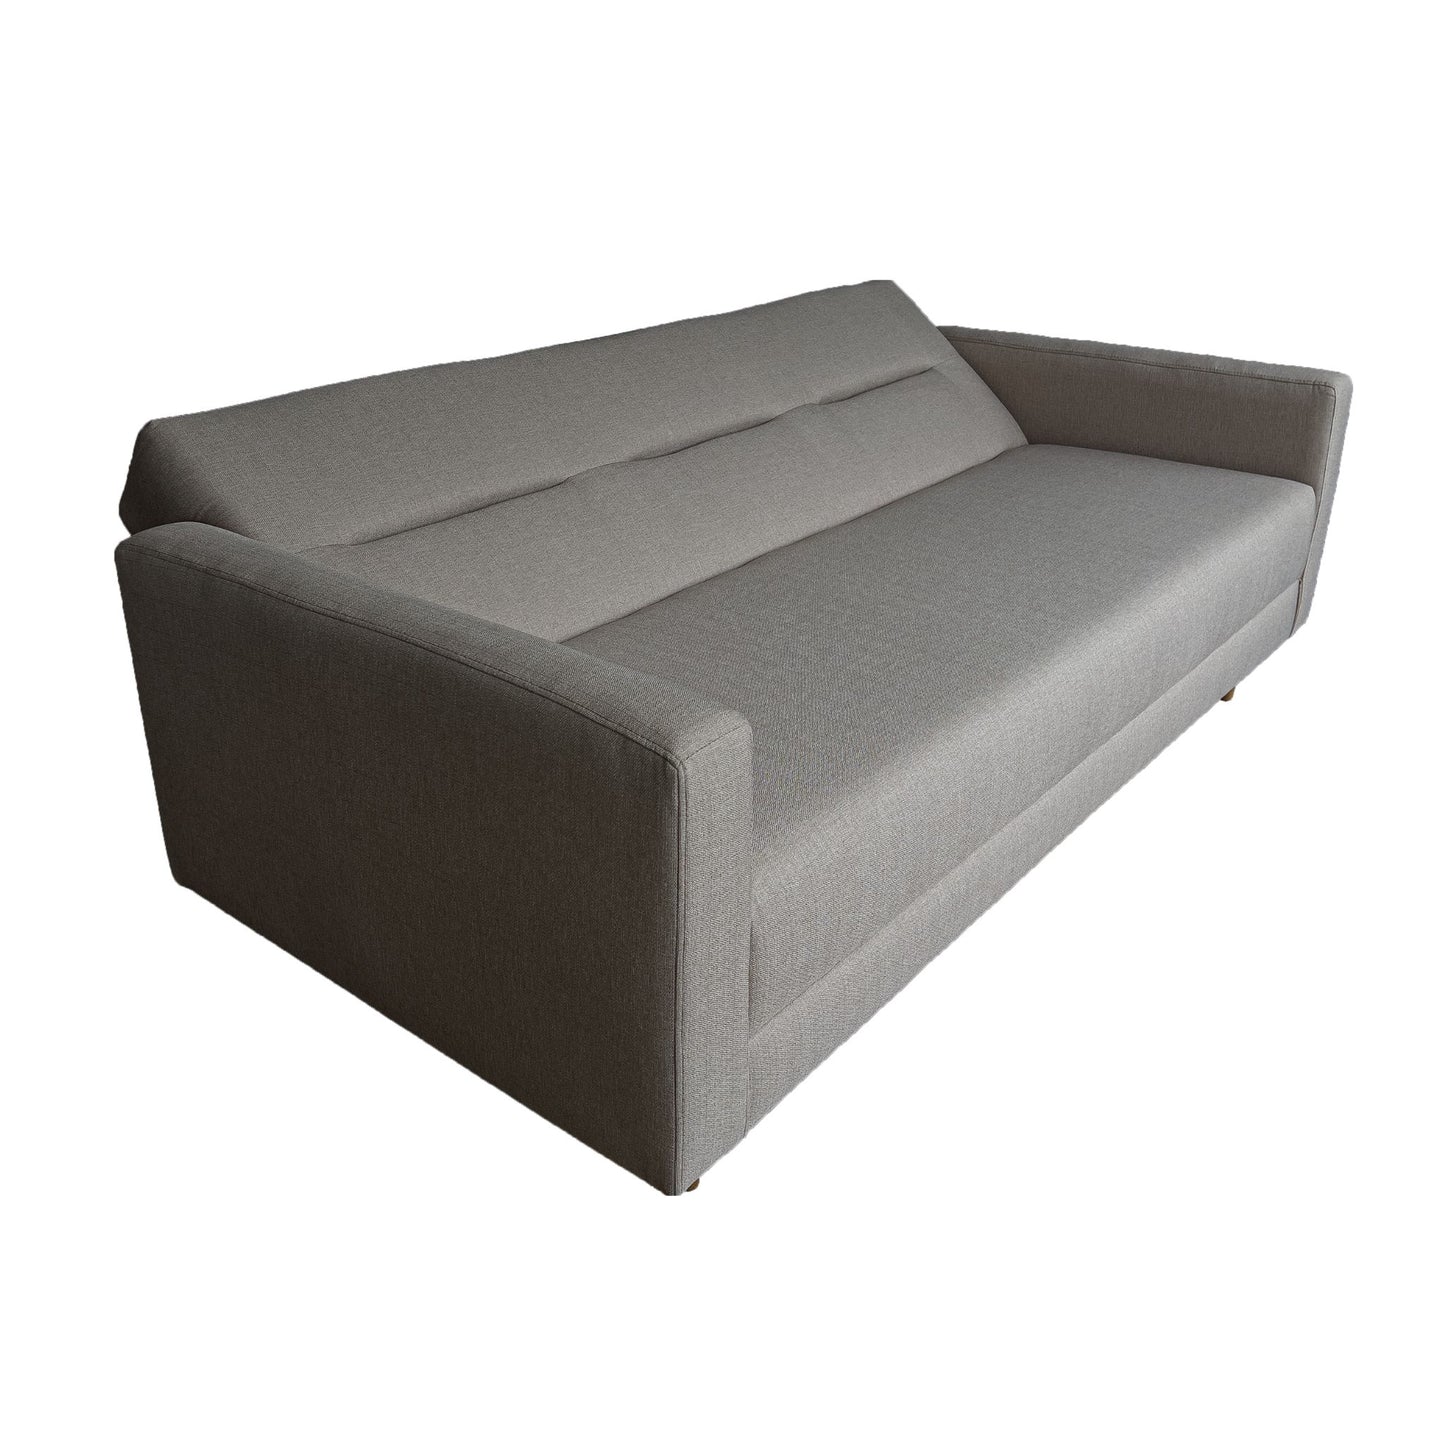 SETH 3 Seater Sofa Bed Pradera Marfil